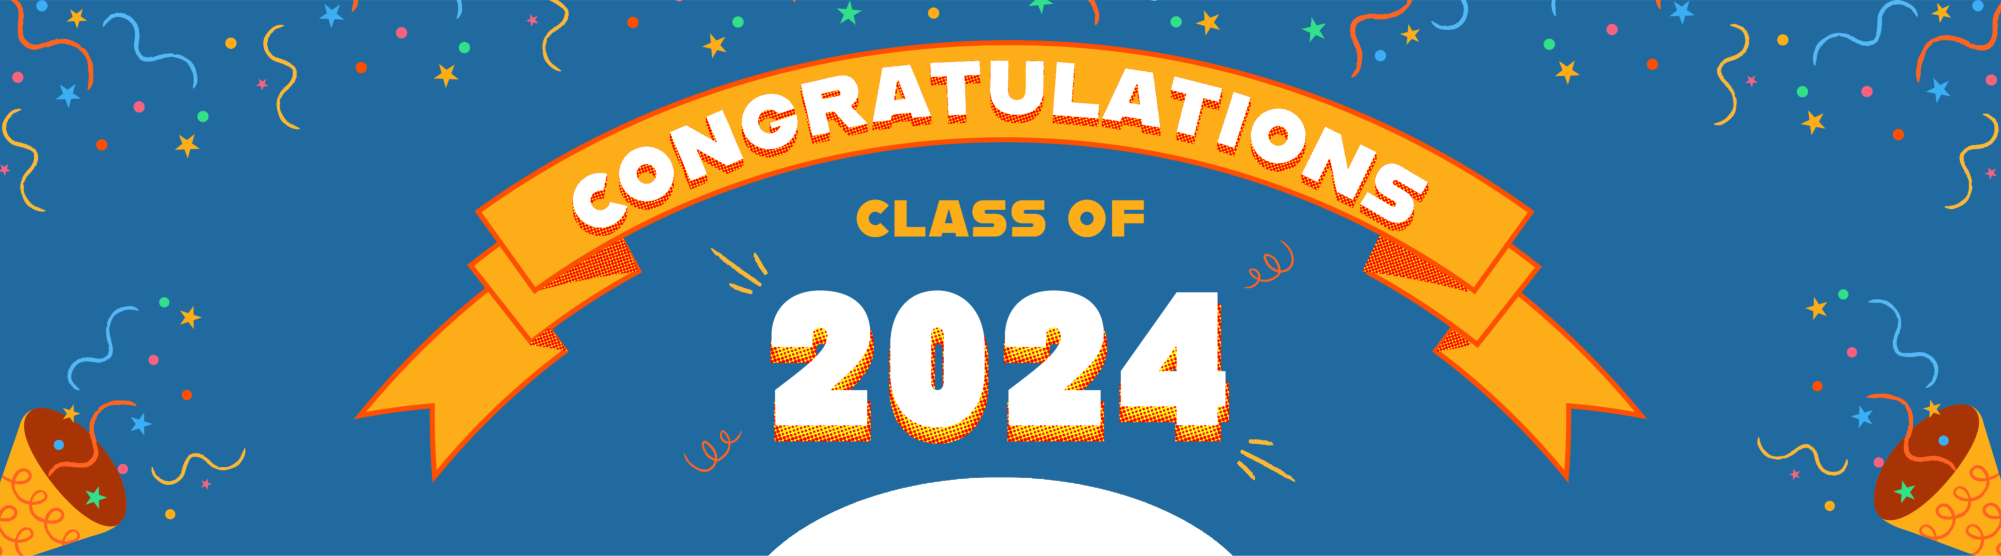 graduation 2024